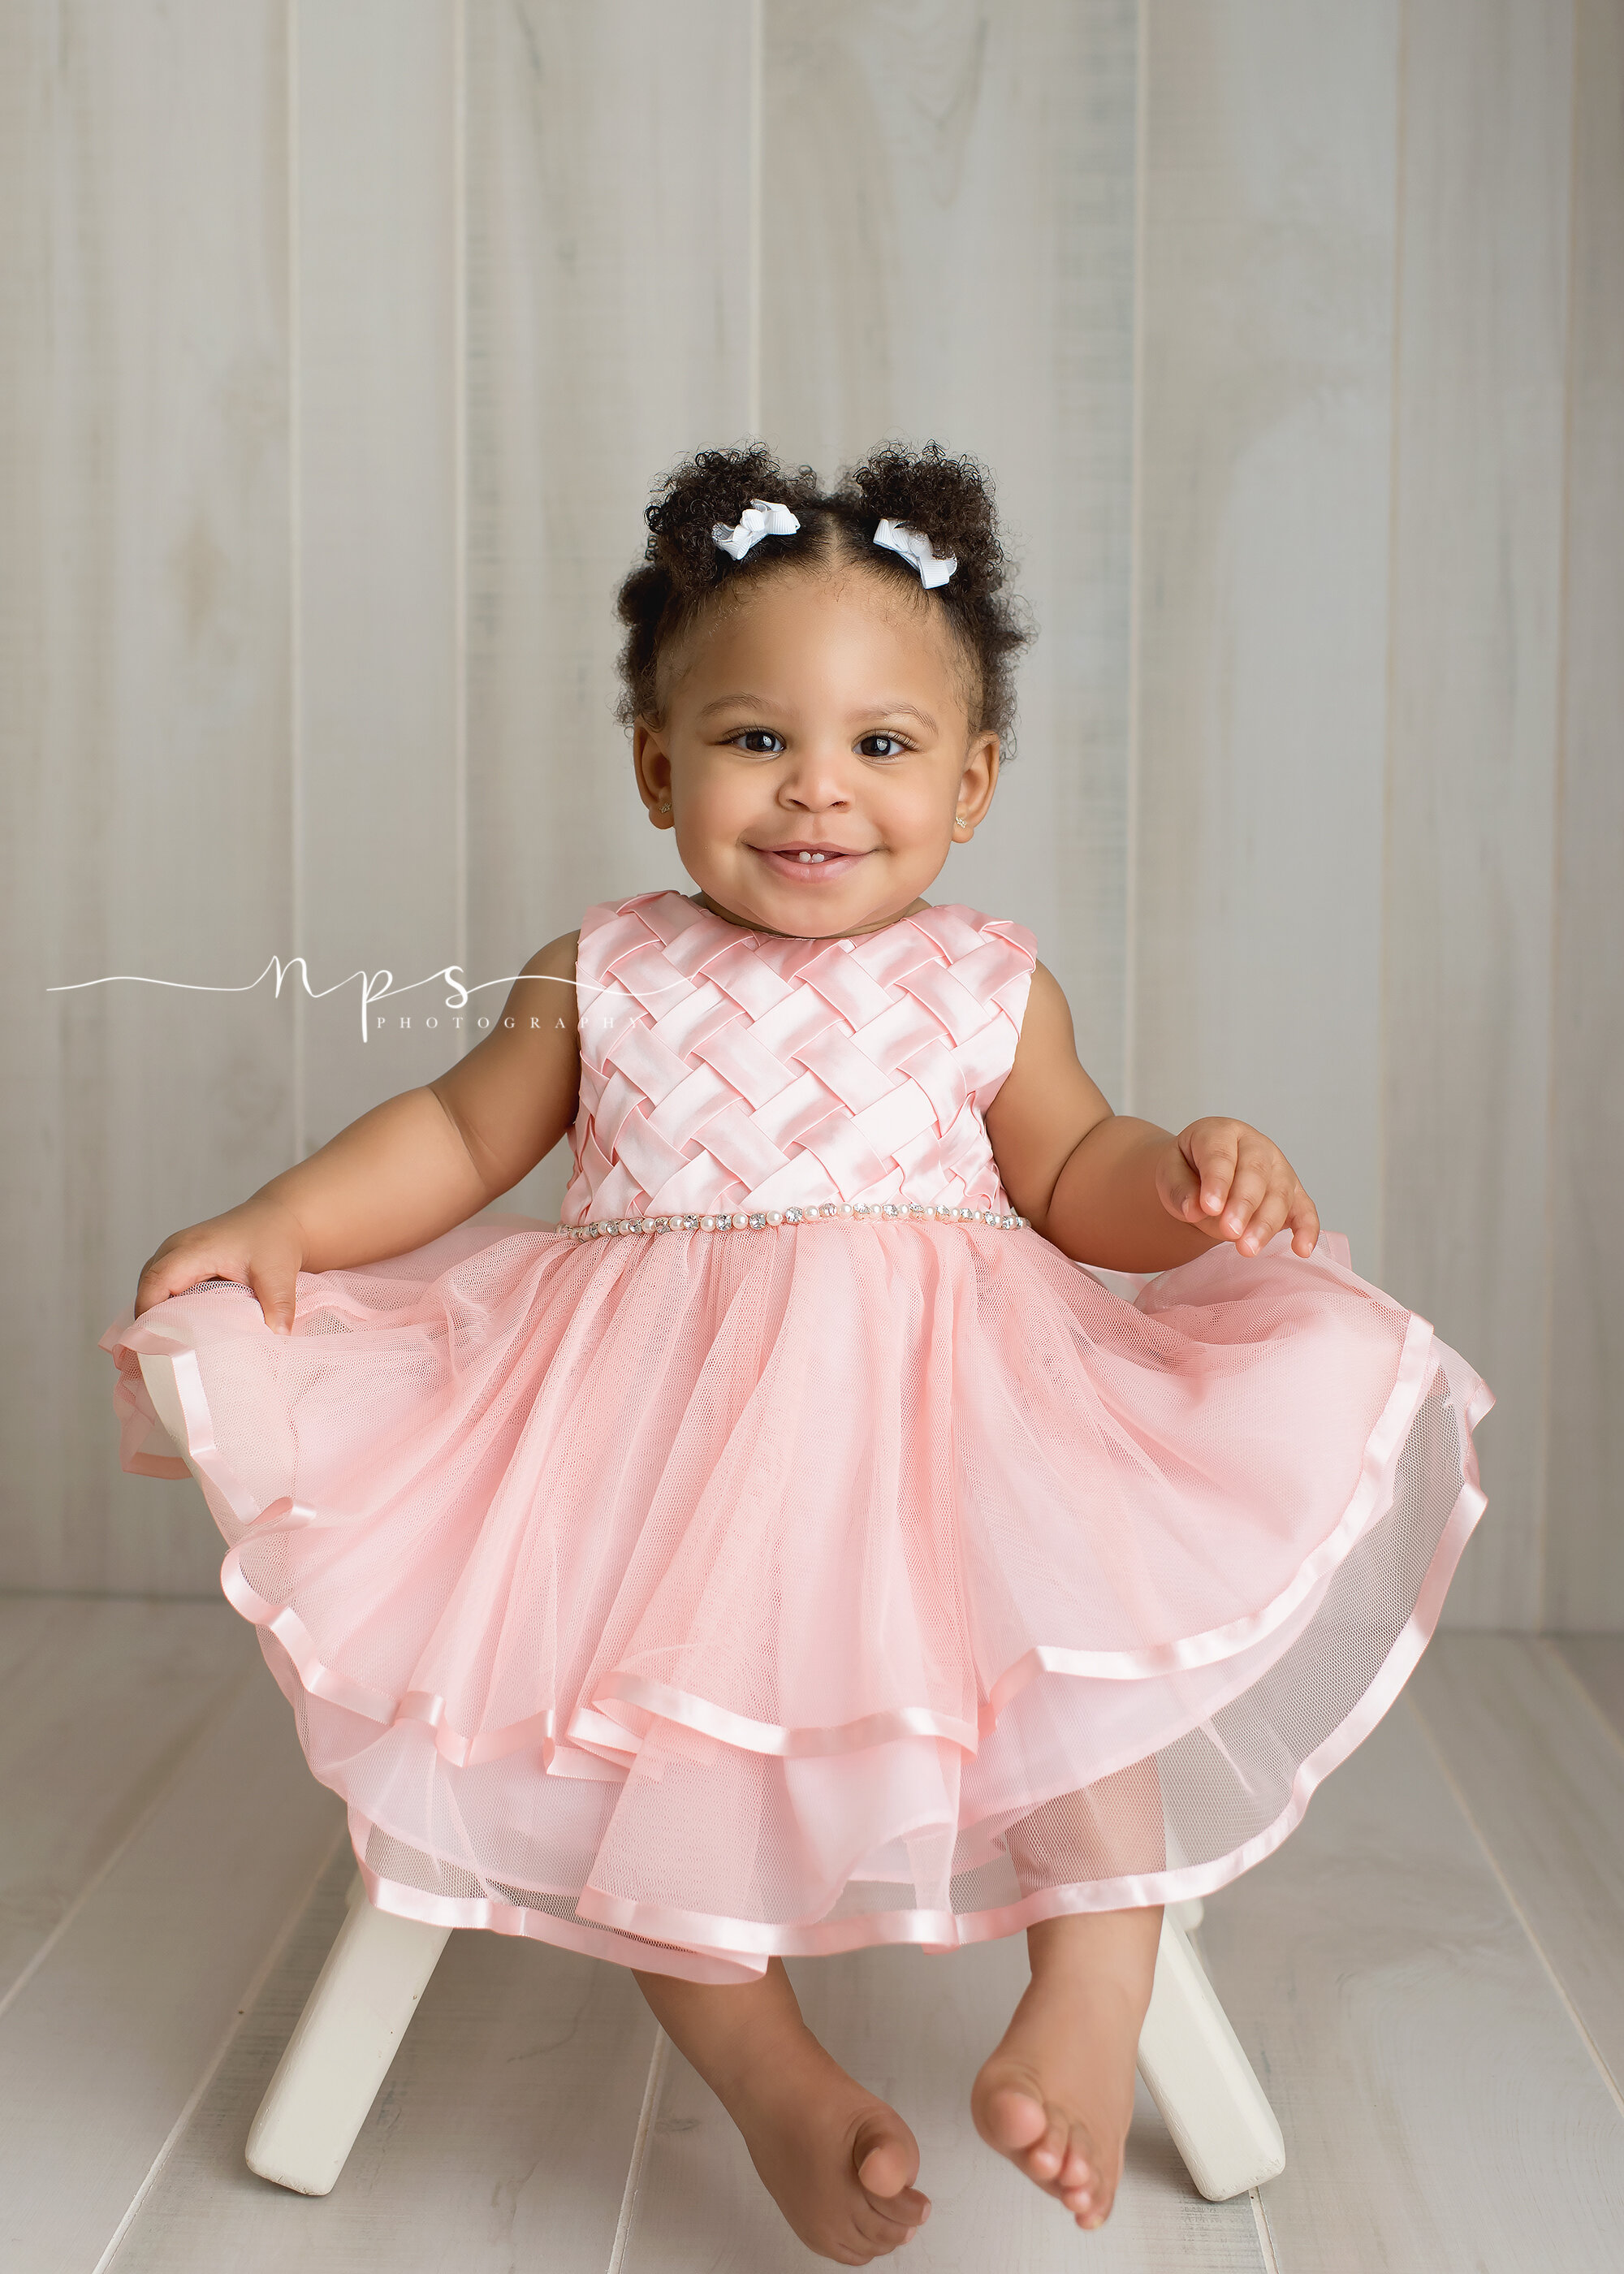 Pinehurst Baby Photographer 2 1 - NPS Photography